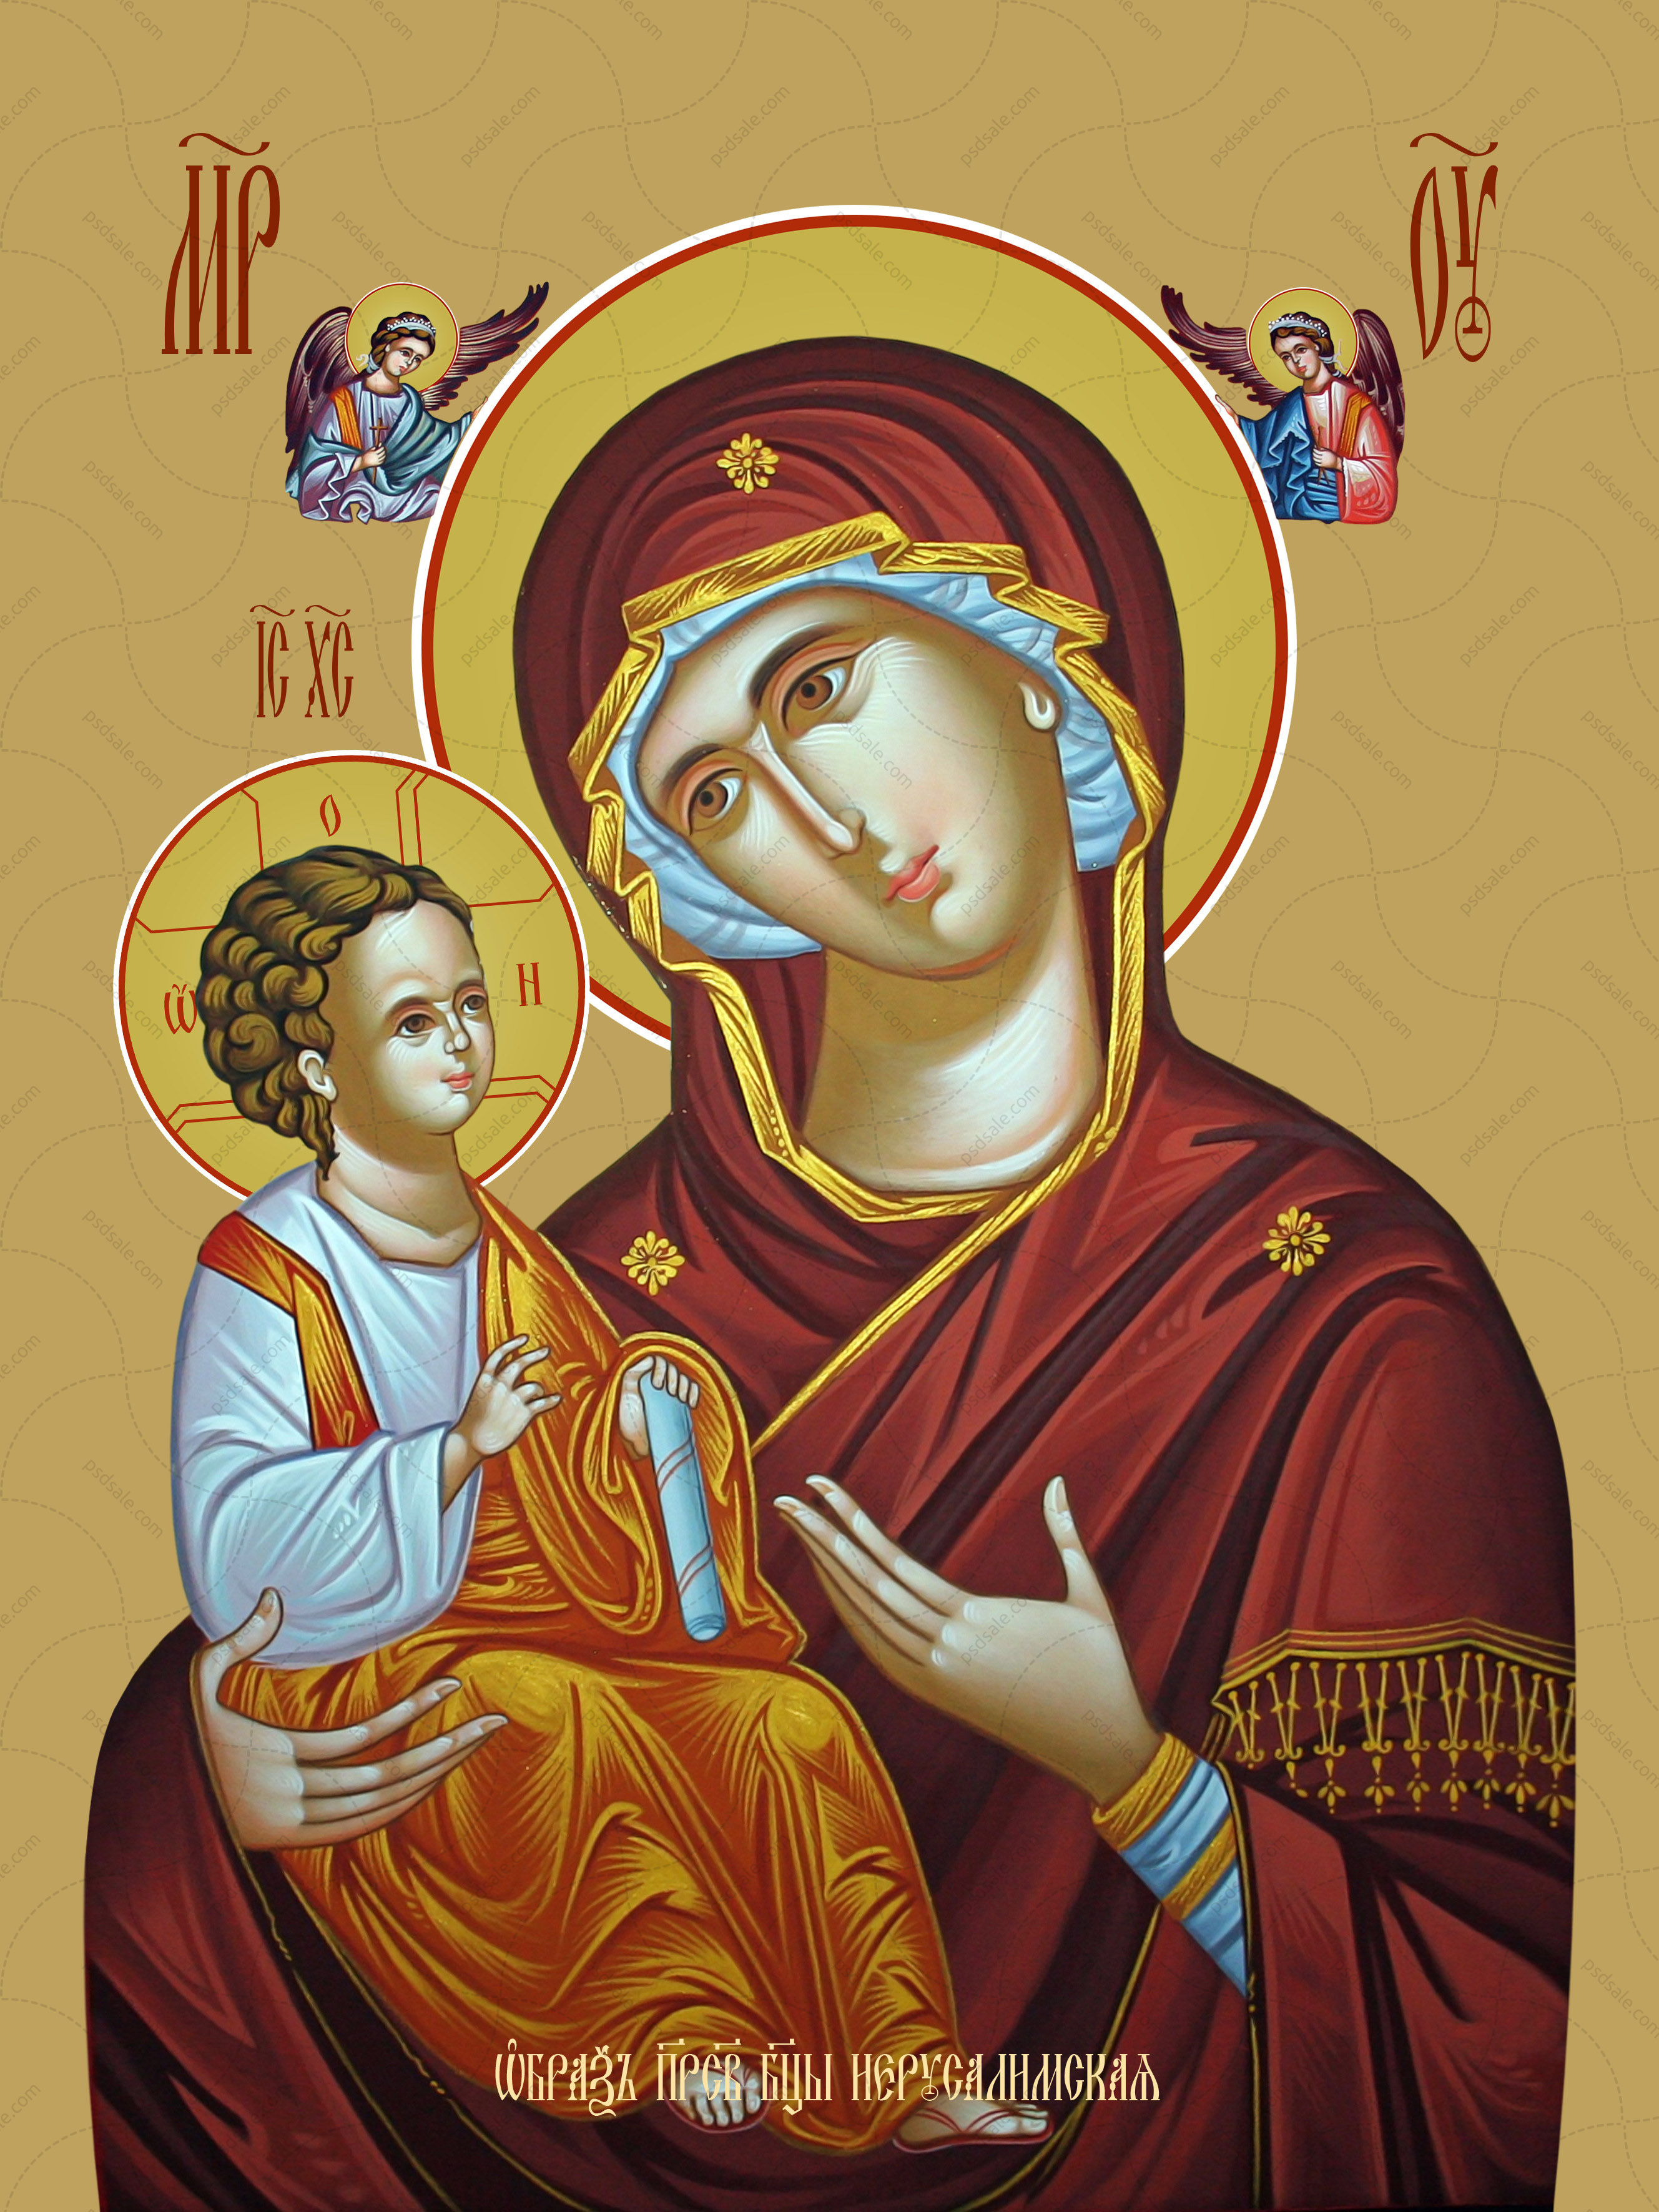 Jerusalem icon of the mother of God